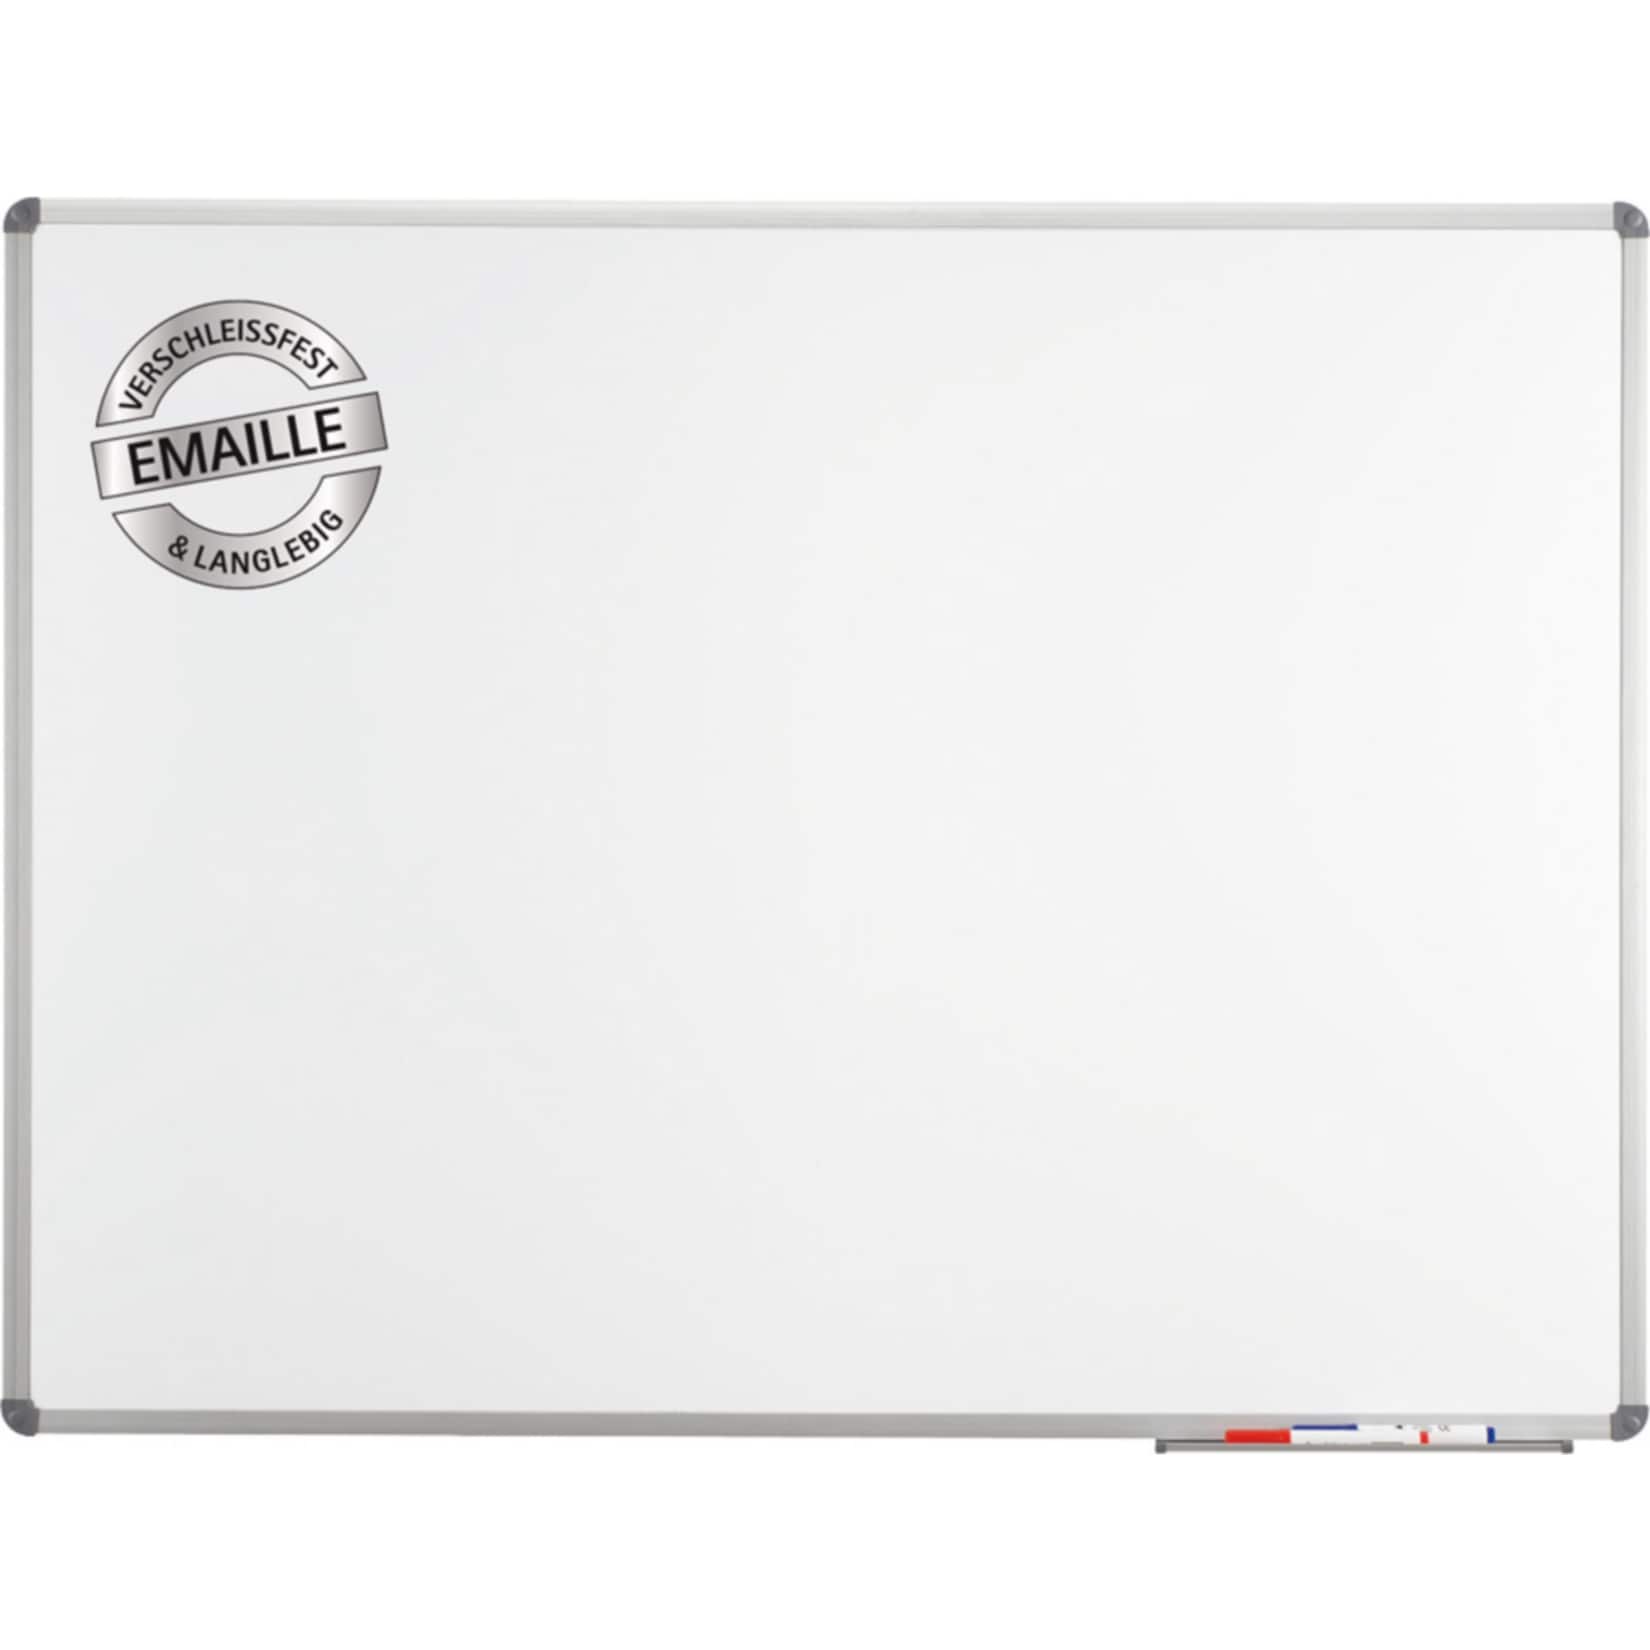 MAUL Whiteboard MAULstandard, Emaille - 120 x 180 cm